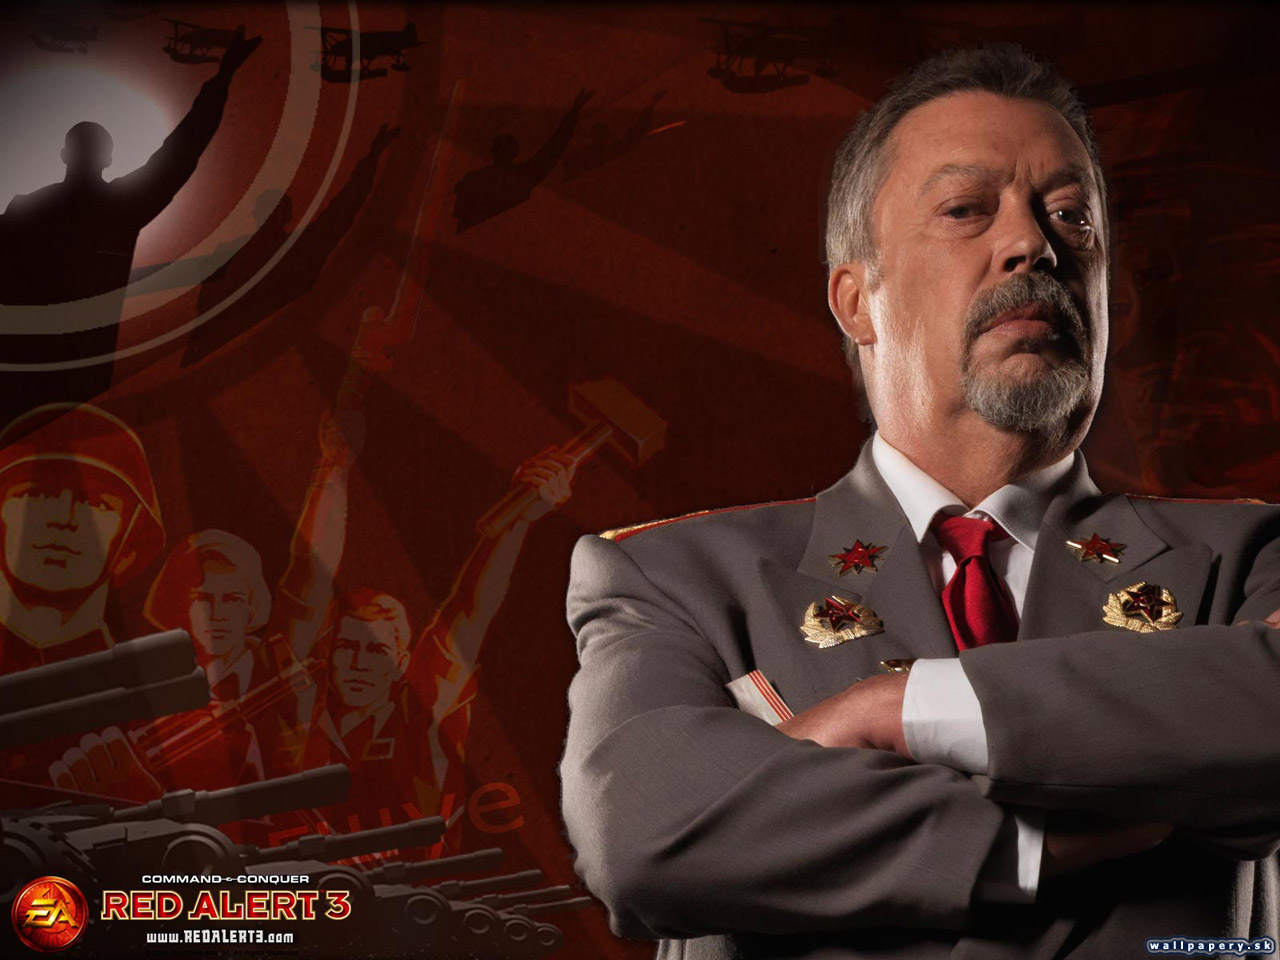 Command & Conquer: Red Alert 3 - wallpaper 18